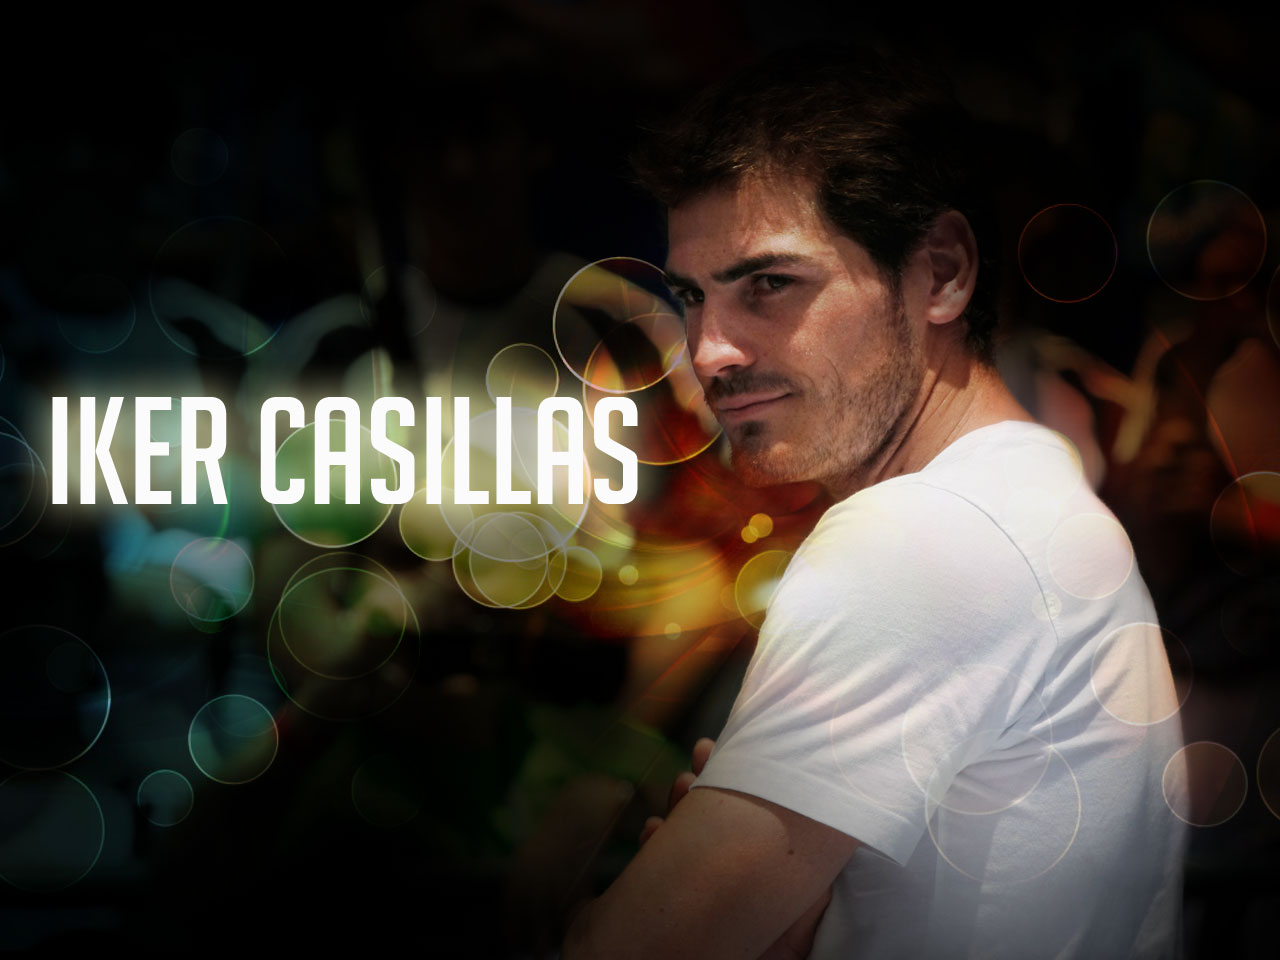 Deskripsi : Wallpaper Simply Casillas, size: 1280x960